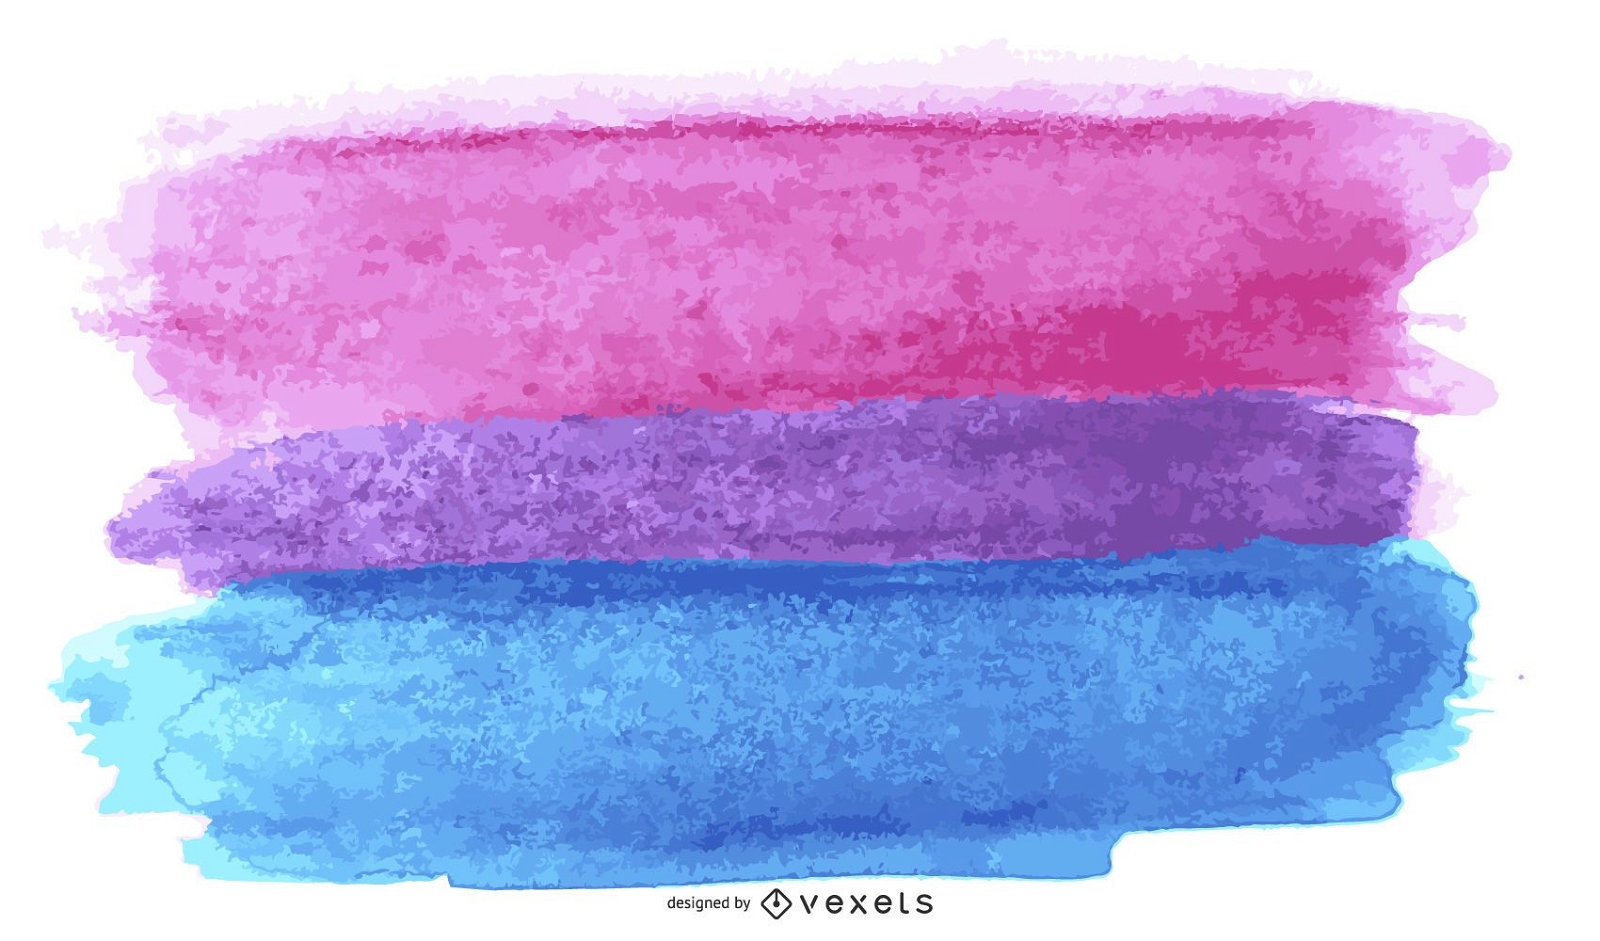 Bisexual pride flag watercolor